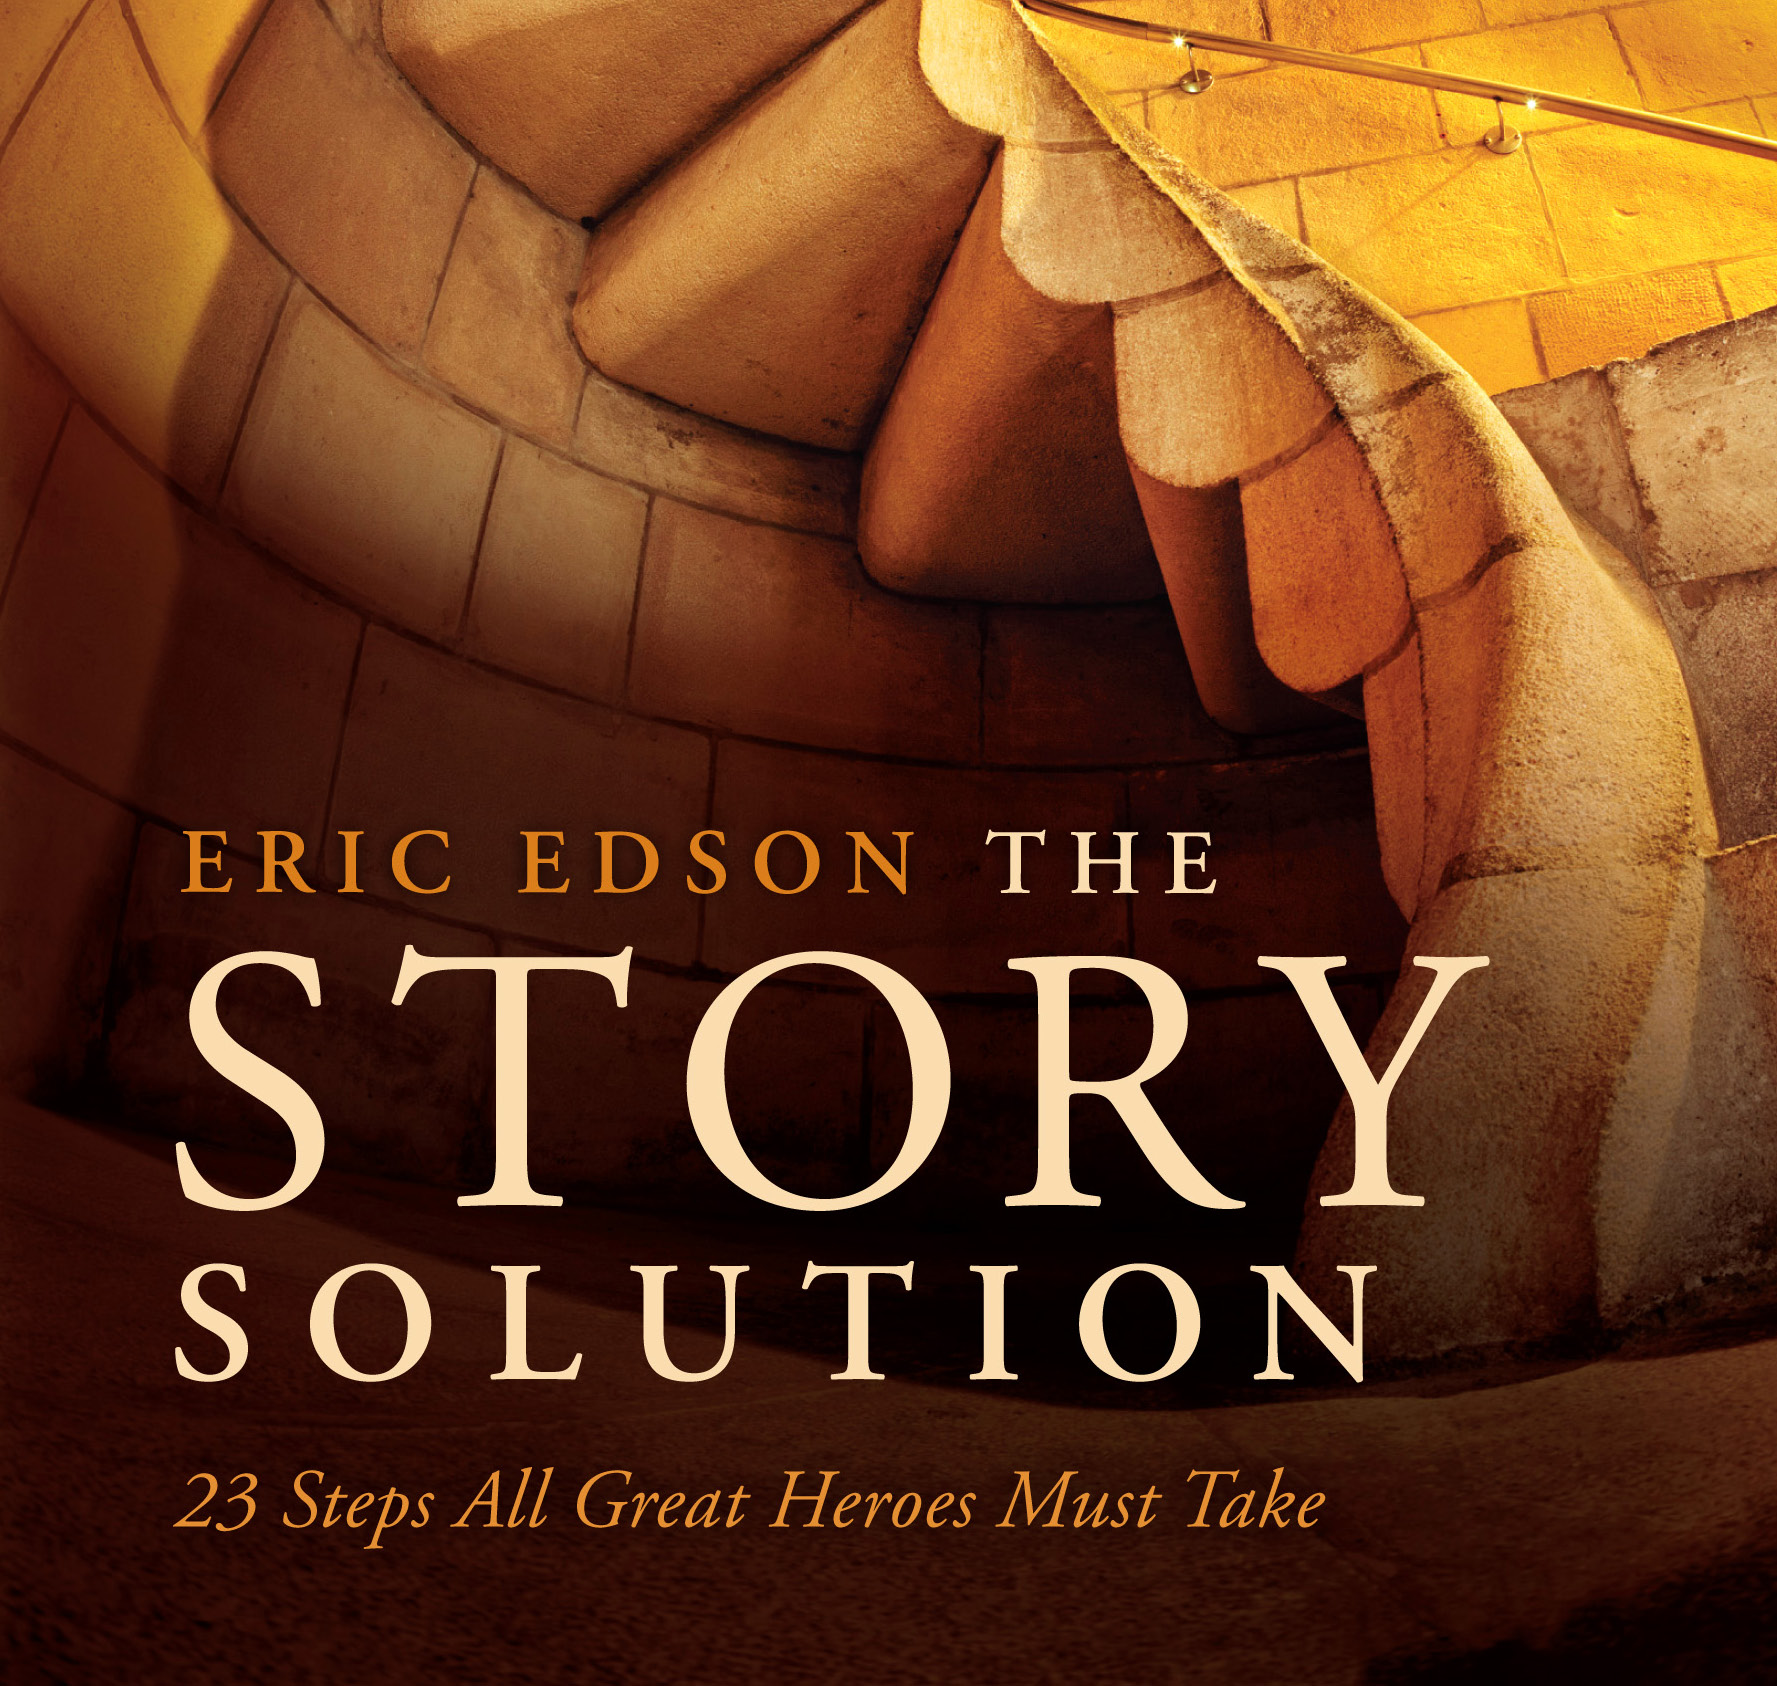 Eric Edson